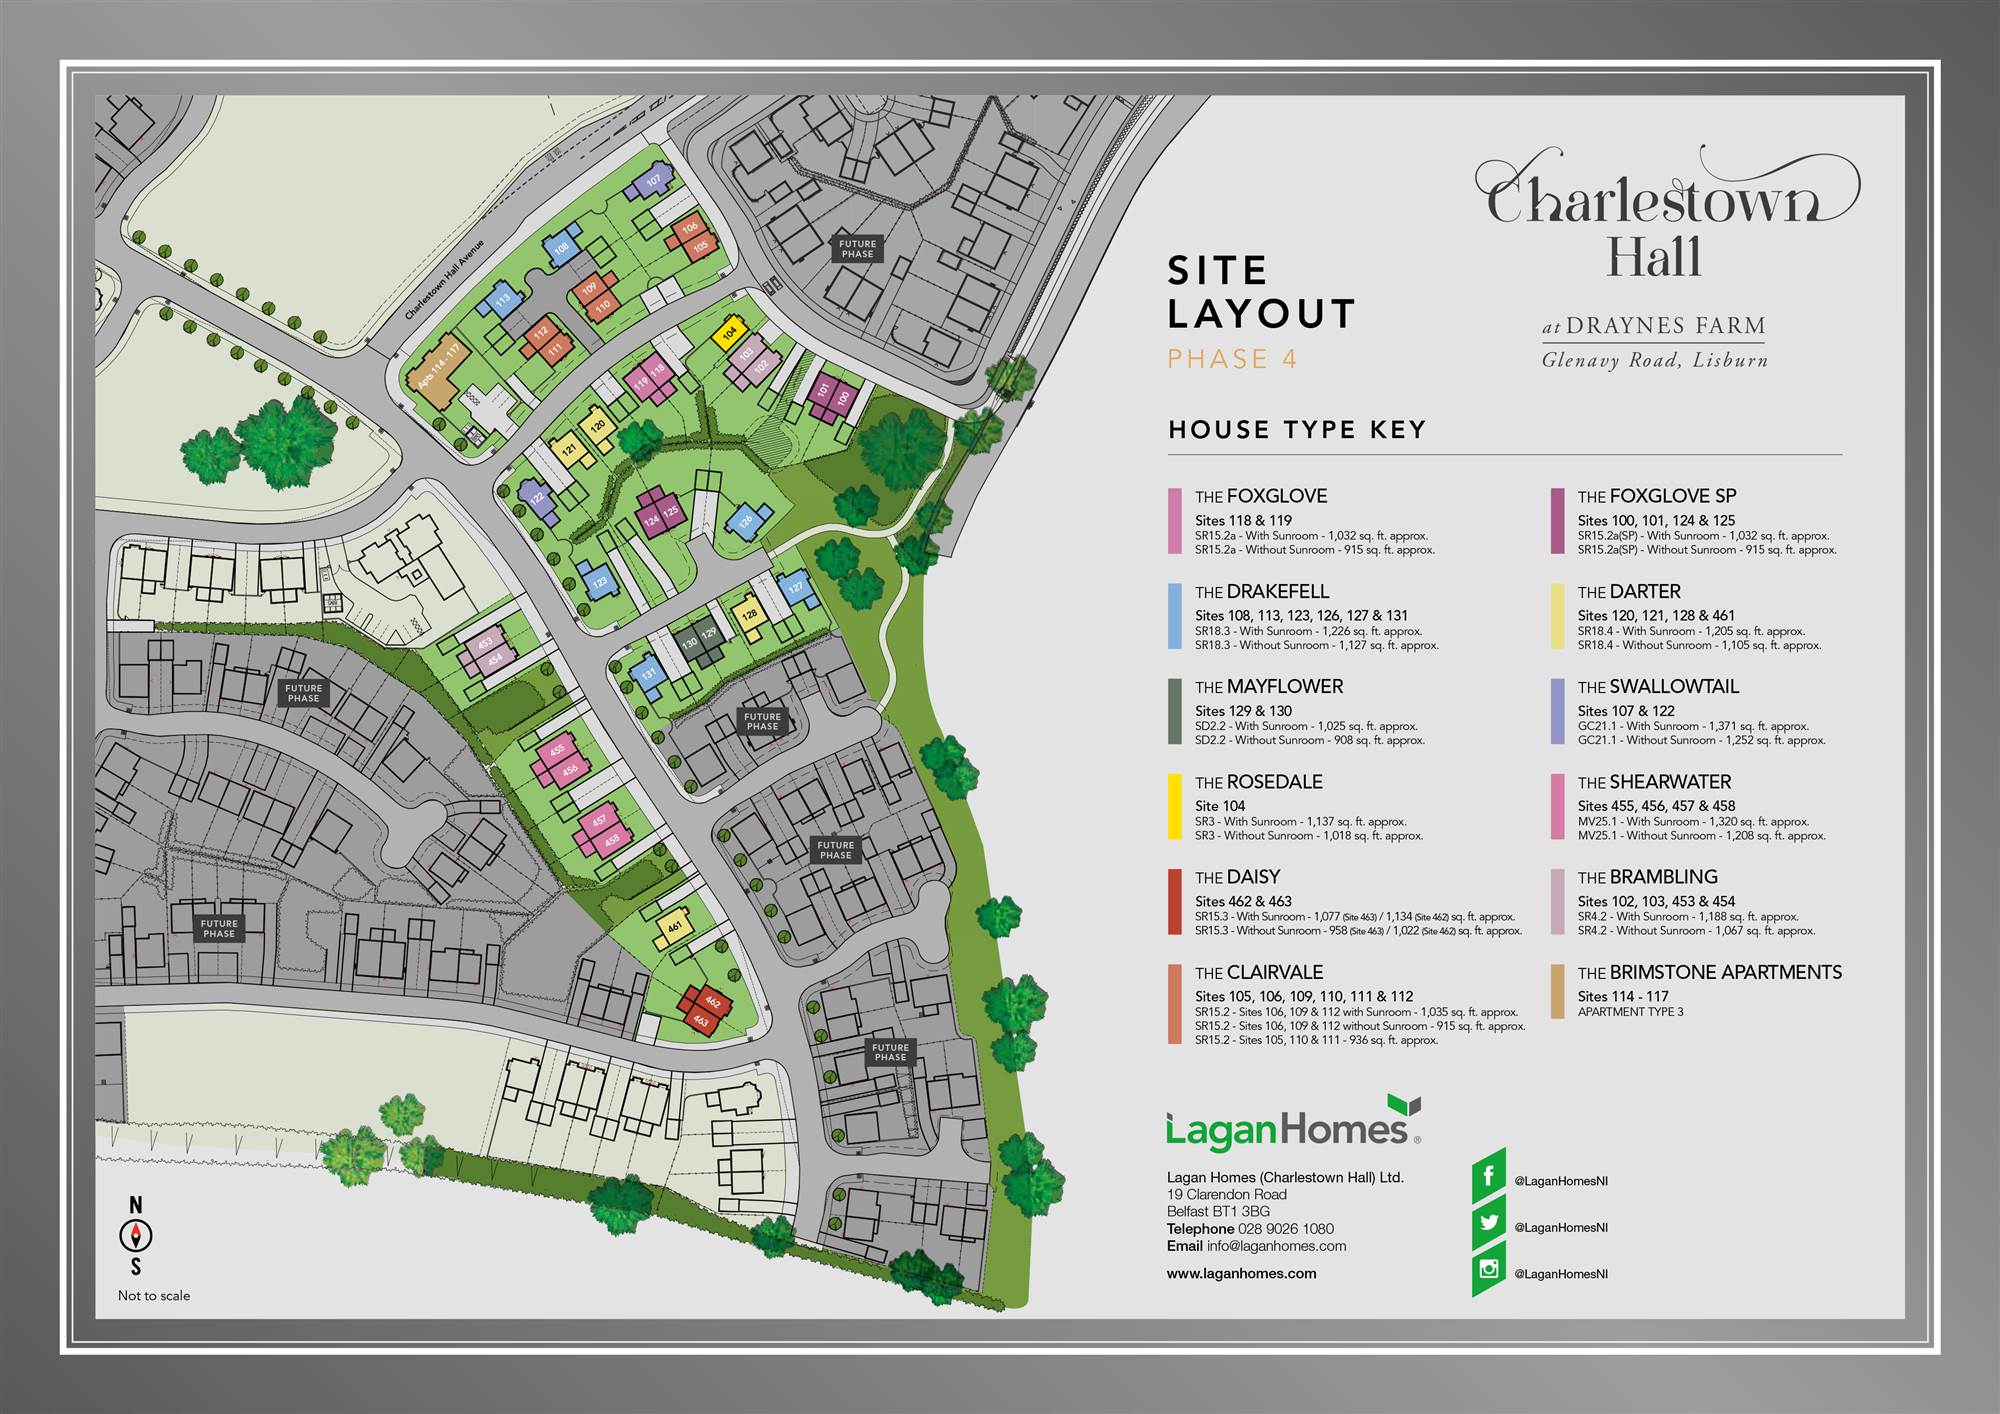 Site L461 Charlestown Hall